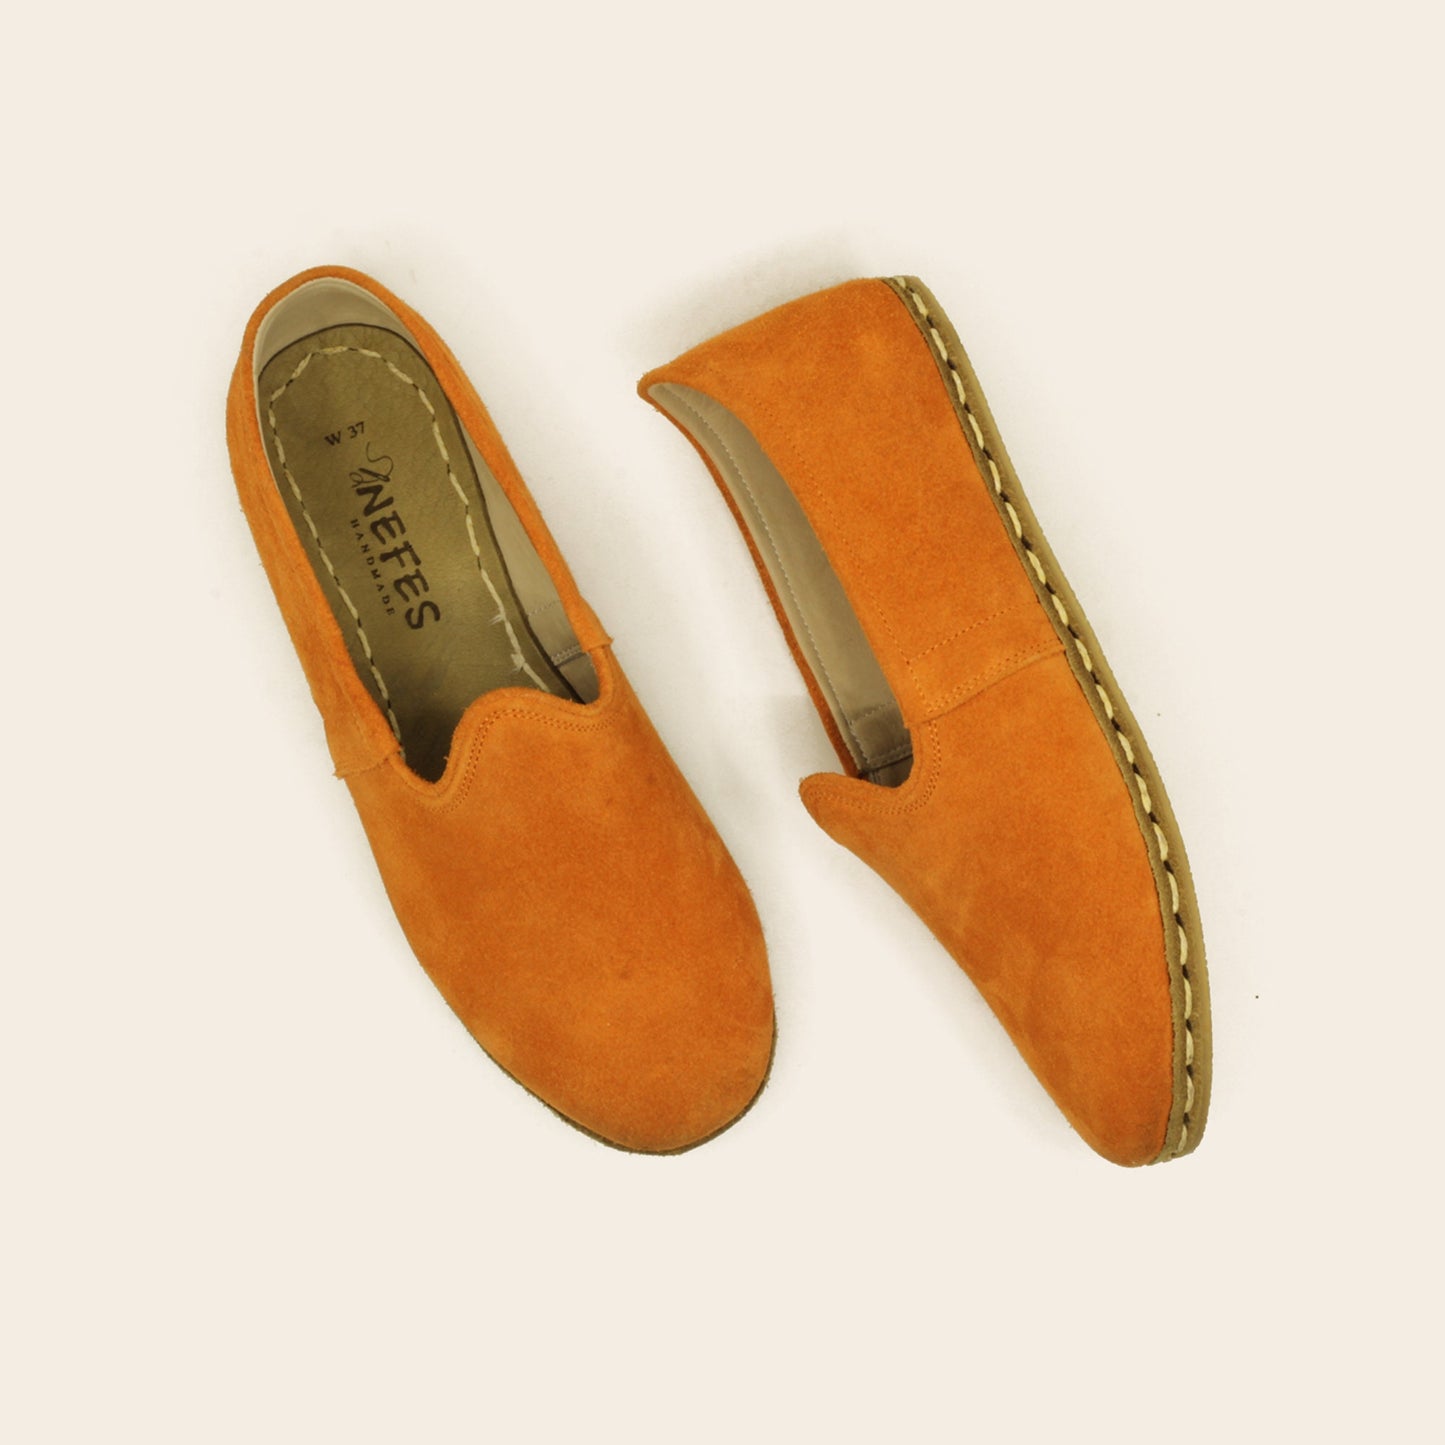 Men Shoes Handmade Orange Suede Leather Turkish Yemeni Rubber Sole